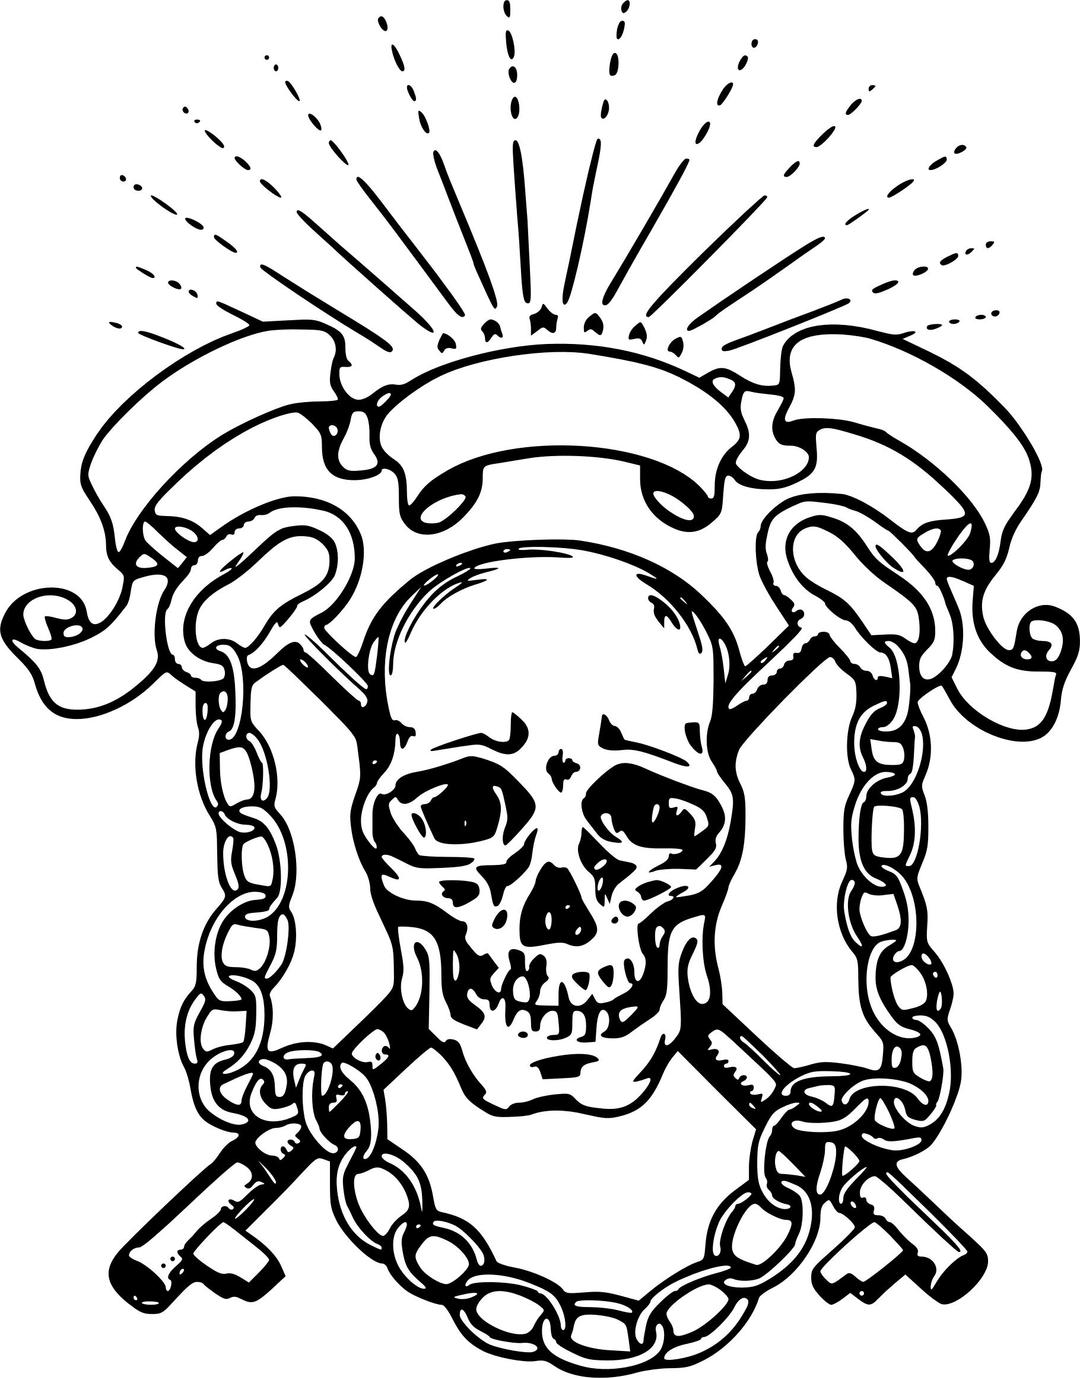 Skull and Keys Emblem png transparent